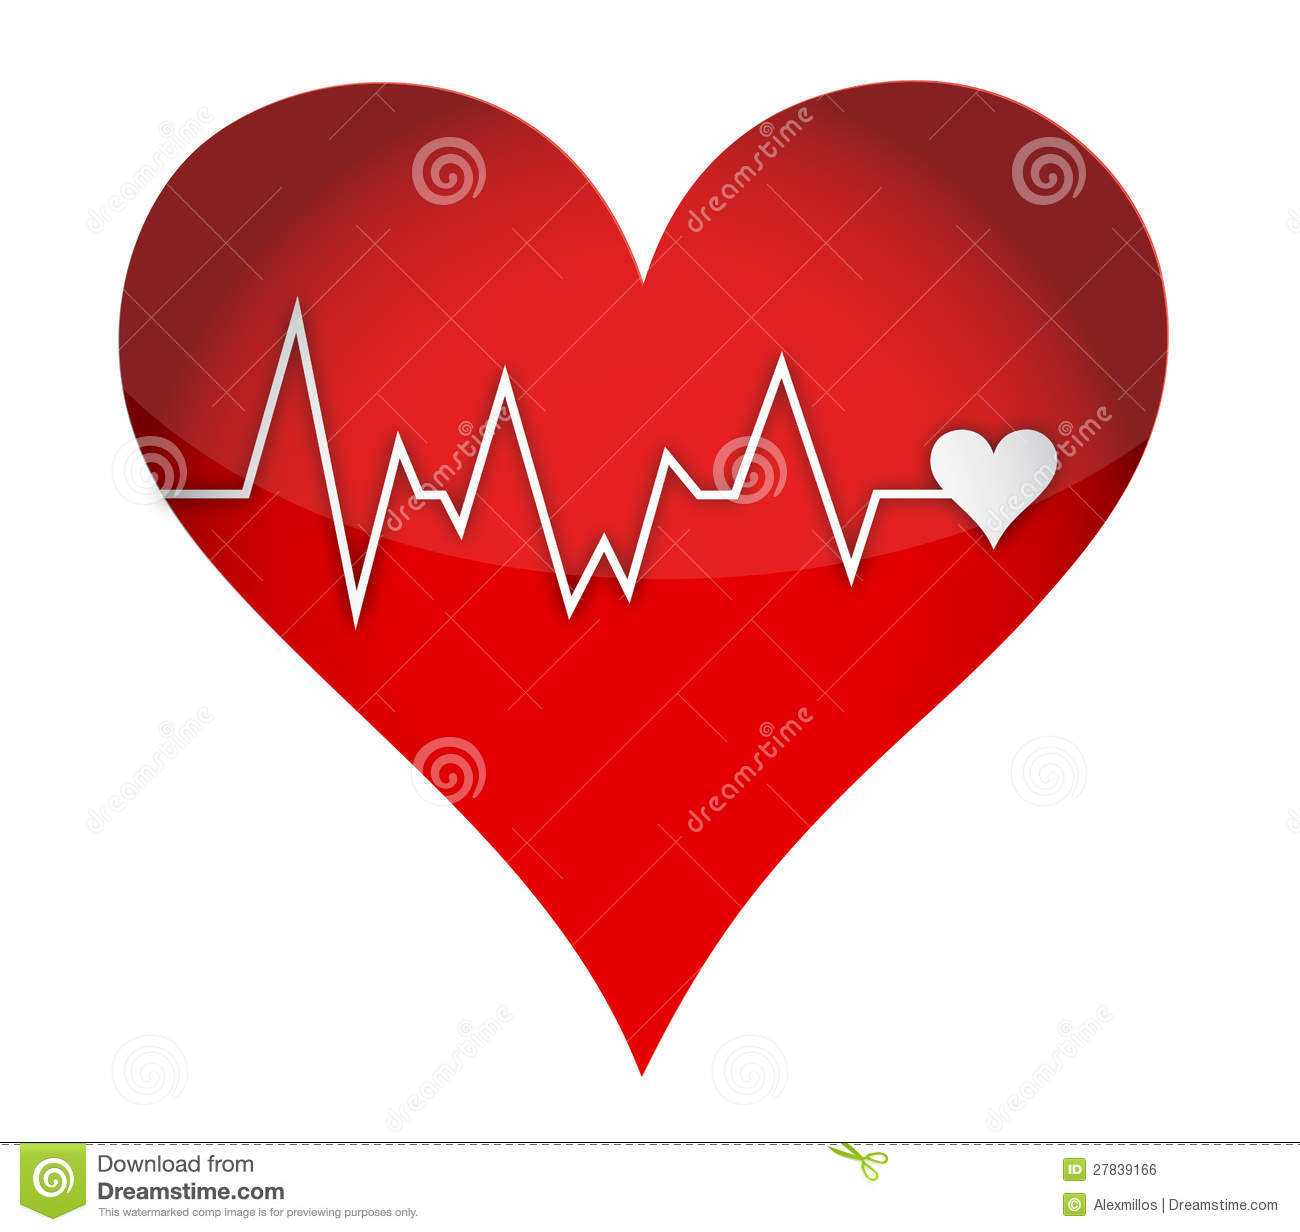 Lifeline Heart Royalty Free Stock Image   Image  27839166